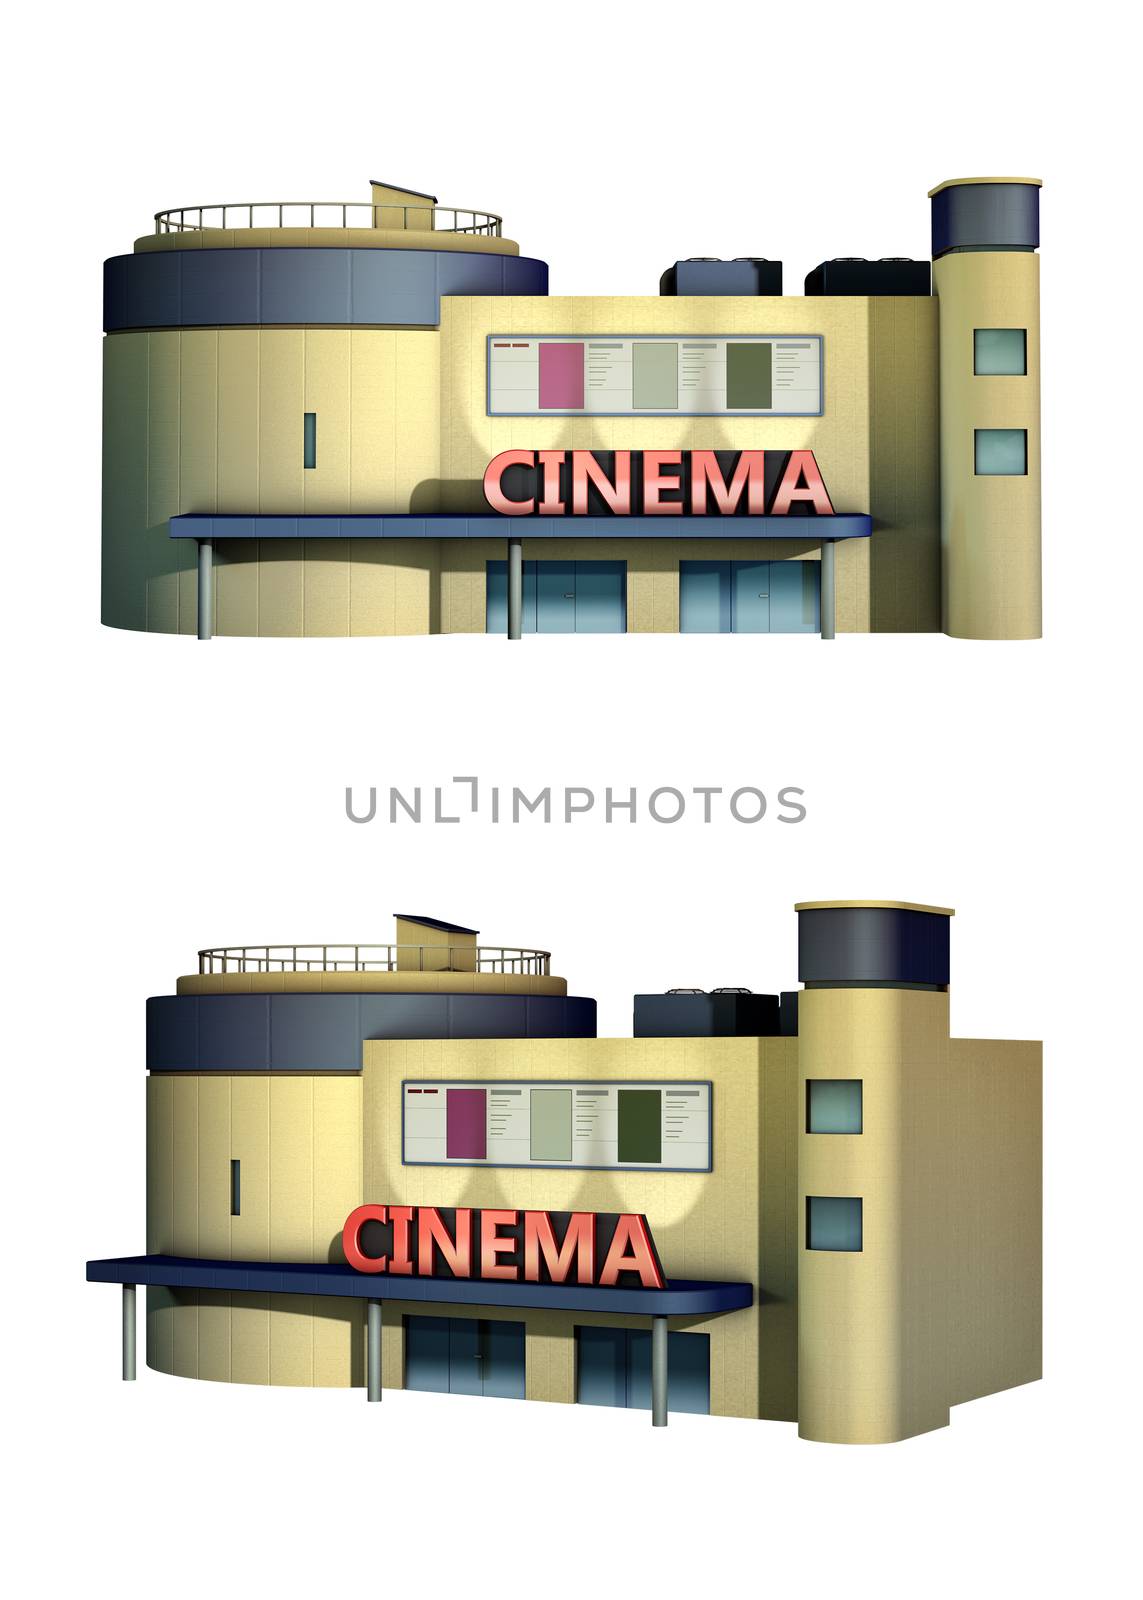 Cinema building by Andreus